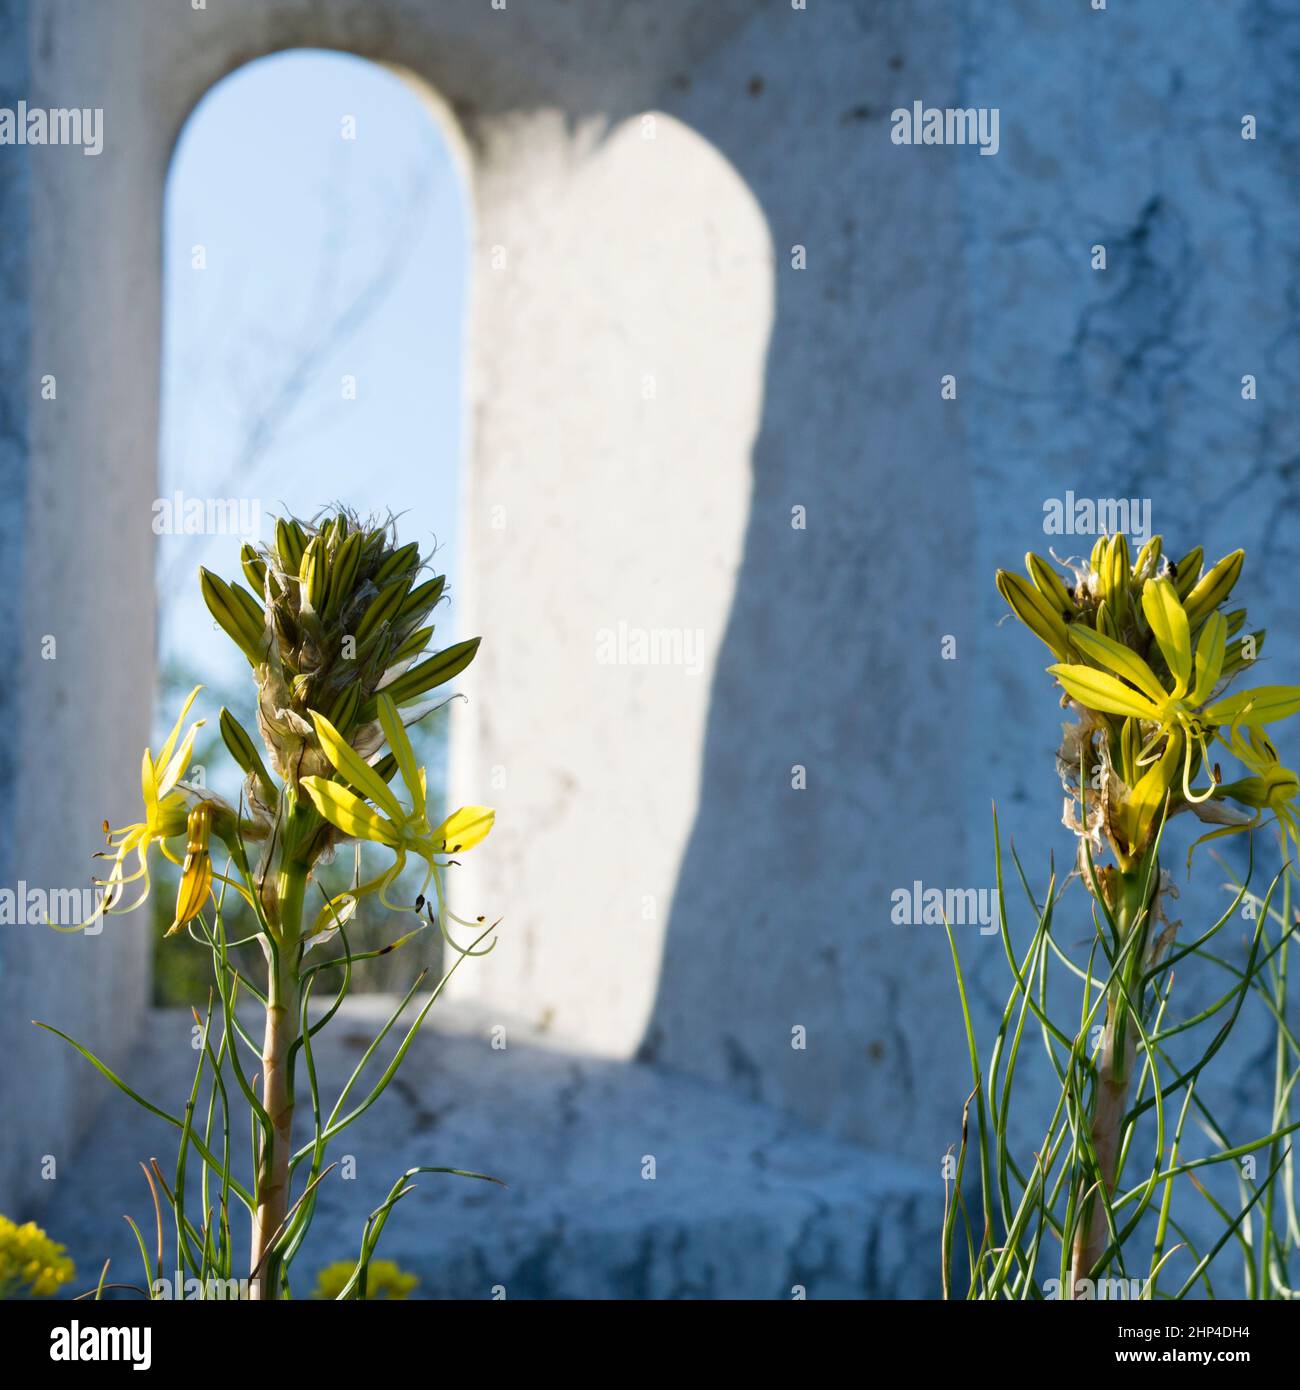 King's spear plant, yellow asphodel, Asphodeline lutea, with yellow flowers, in Croatia, Europe Stock Photo